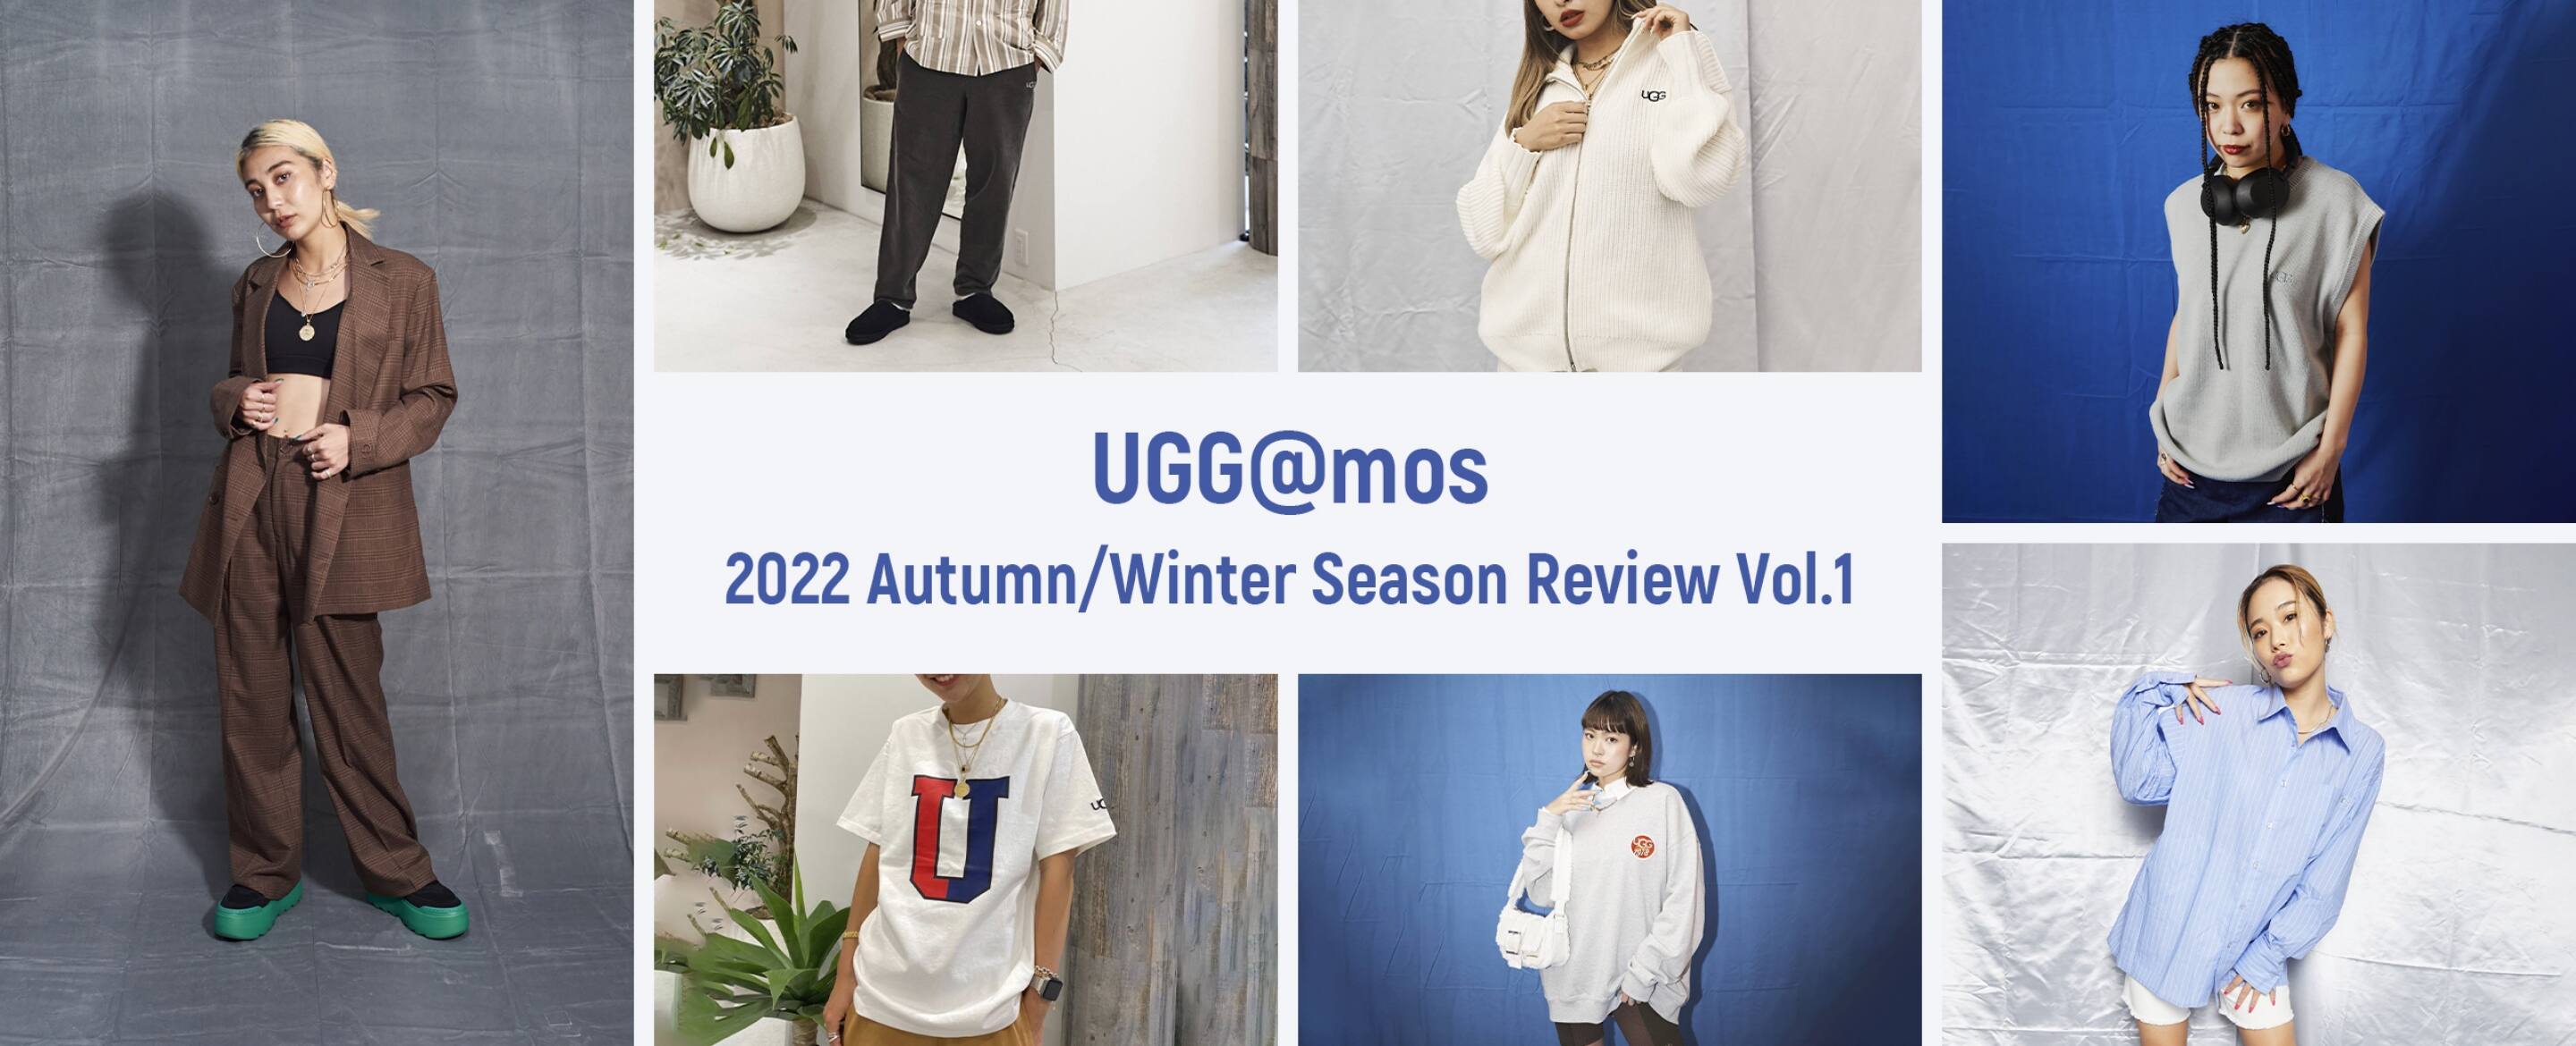 UGG@mos 2022 Autumn/Winter Season Review Vol.1